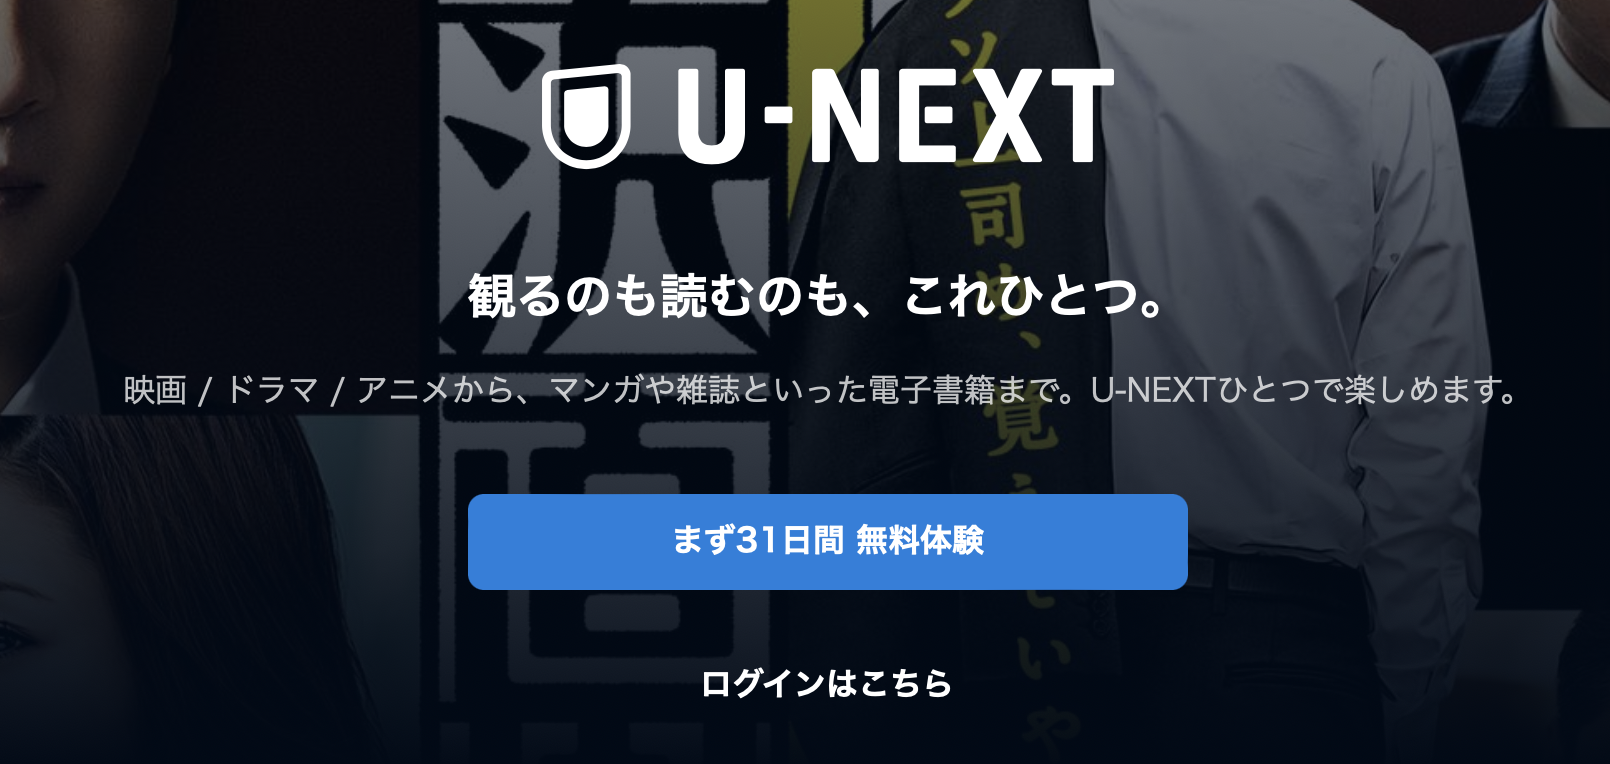 U-next ホーム画面